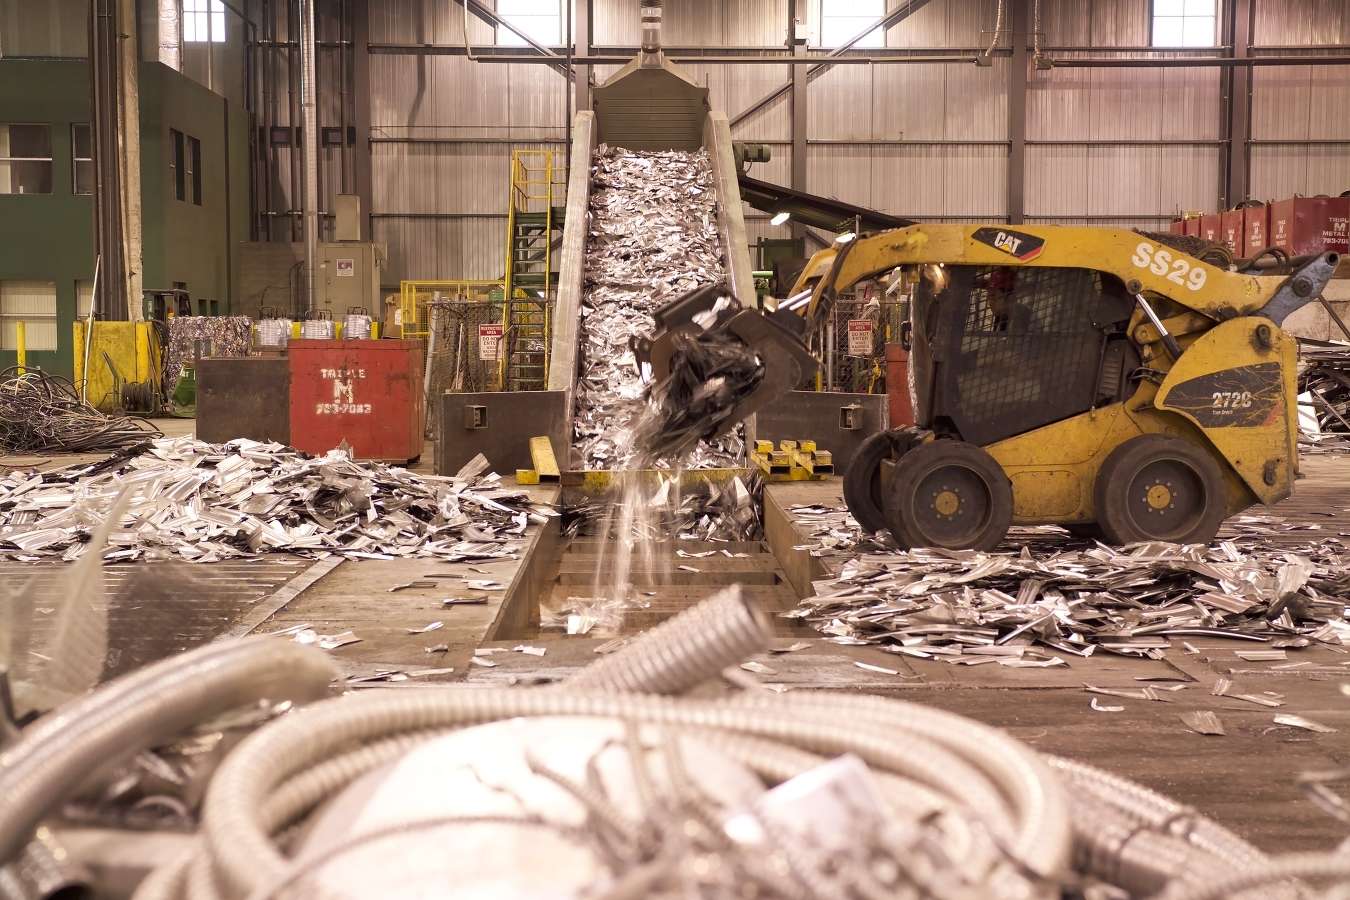 Bobcat handling scrap metal for recycling